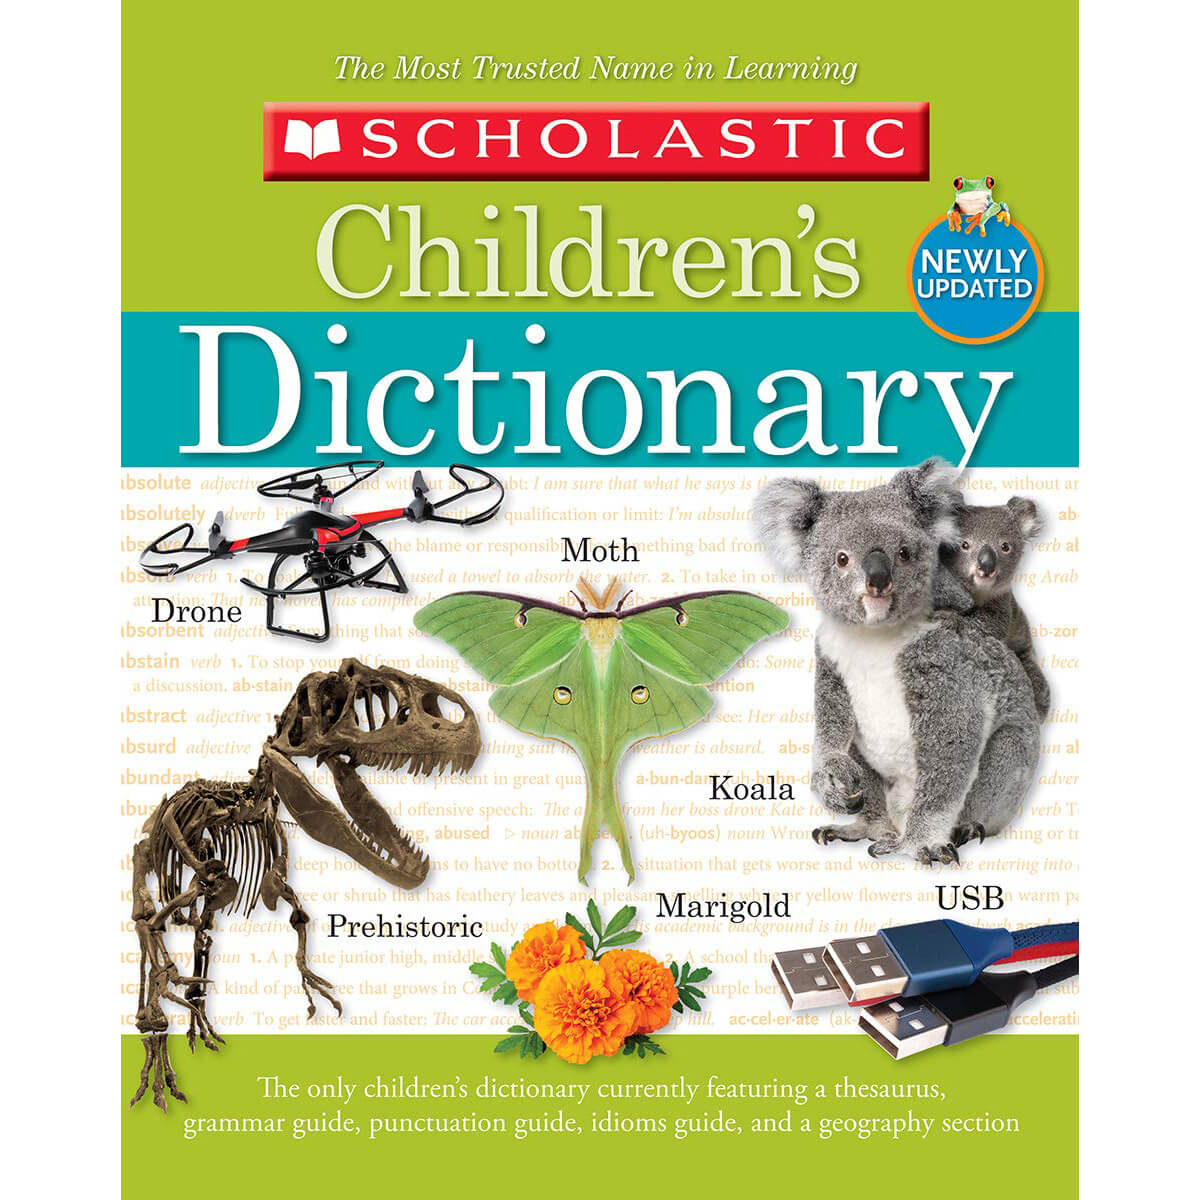 Scholastic Children's Dictionary (Revised) (Paperback)